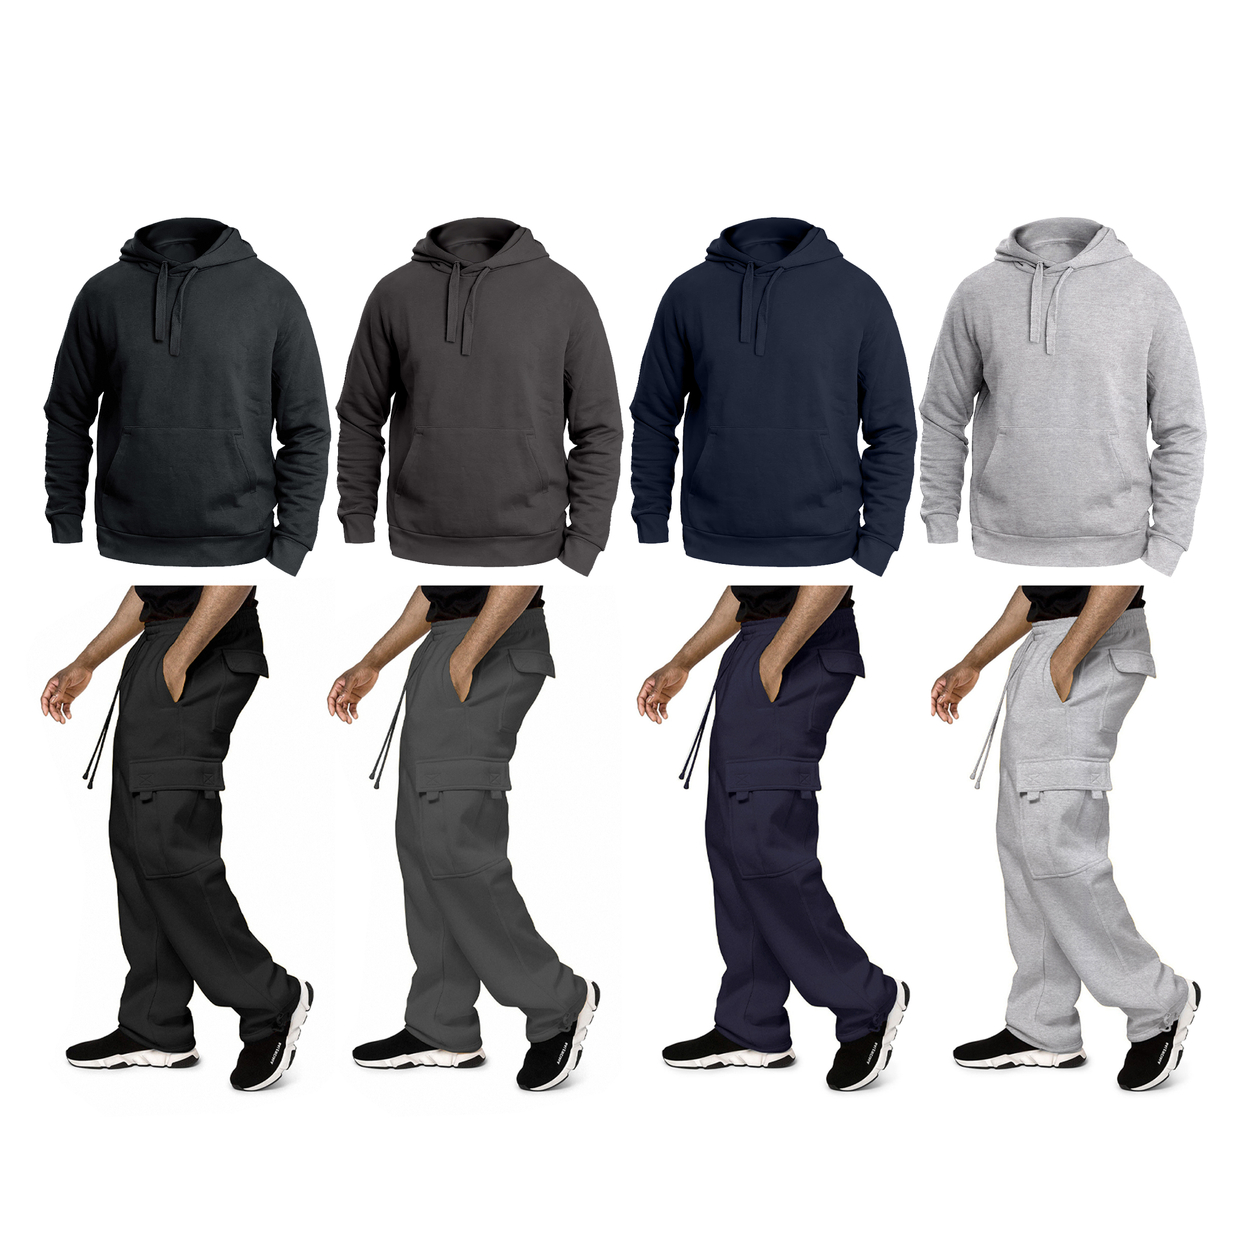 2-Pack: Men's Big & Tall Winter Warm Cozy Athletic Fleece Lined Multi-Pocket Cargo Sweatsuit - Grey, Large